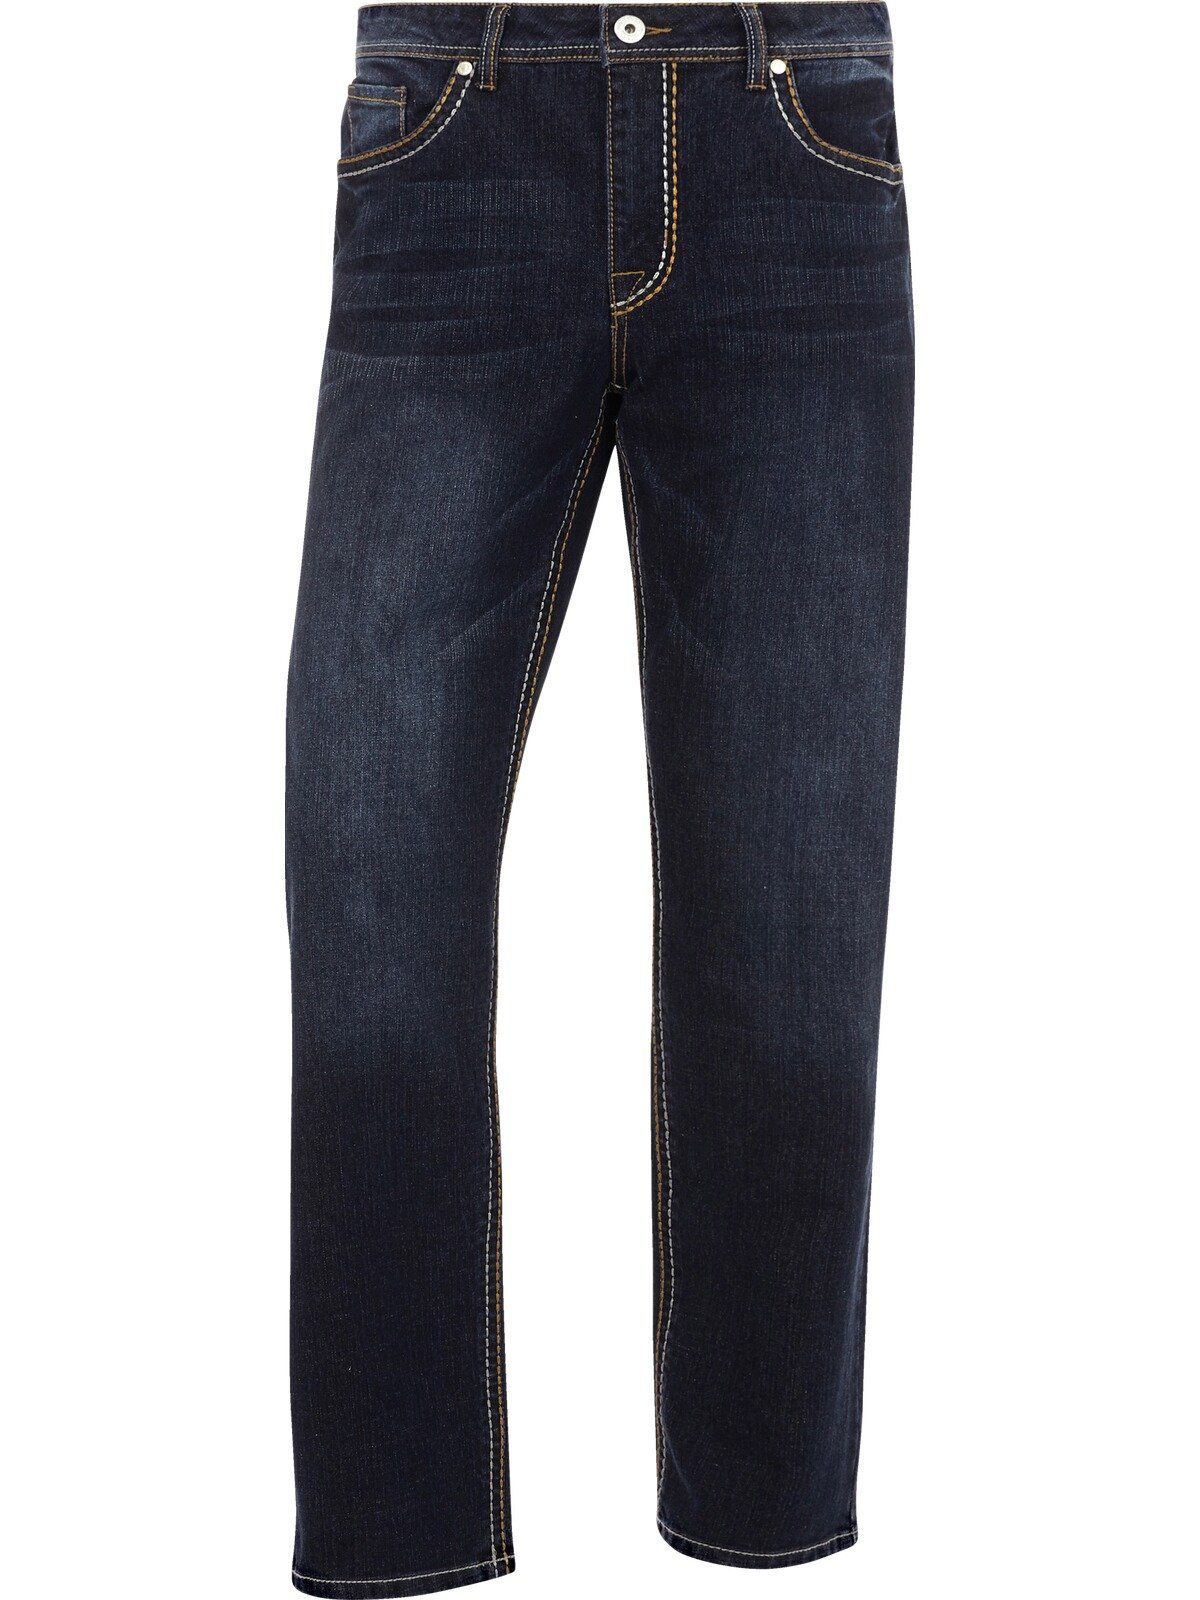 Fit Kollektion, Vanderstorm Comfort-fit-Jeans dunkelblau Comfort Jan +Fit JANI